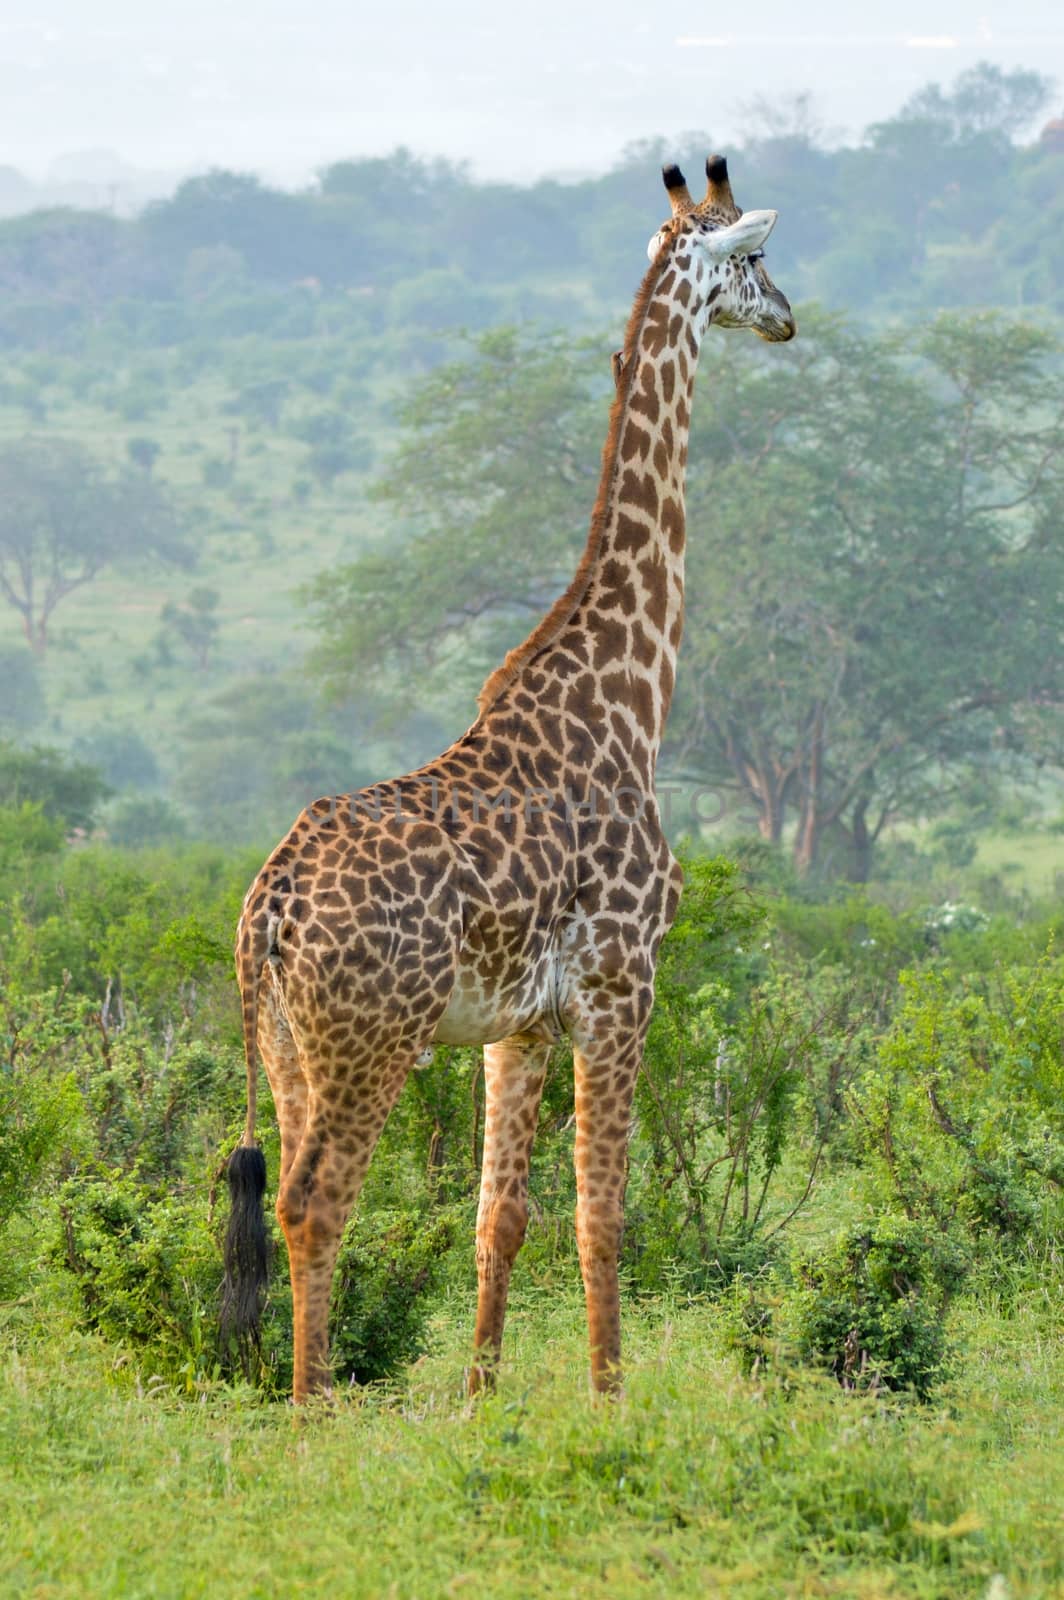 Giraffe in the savanna  by Philou1000